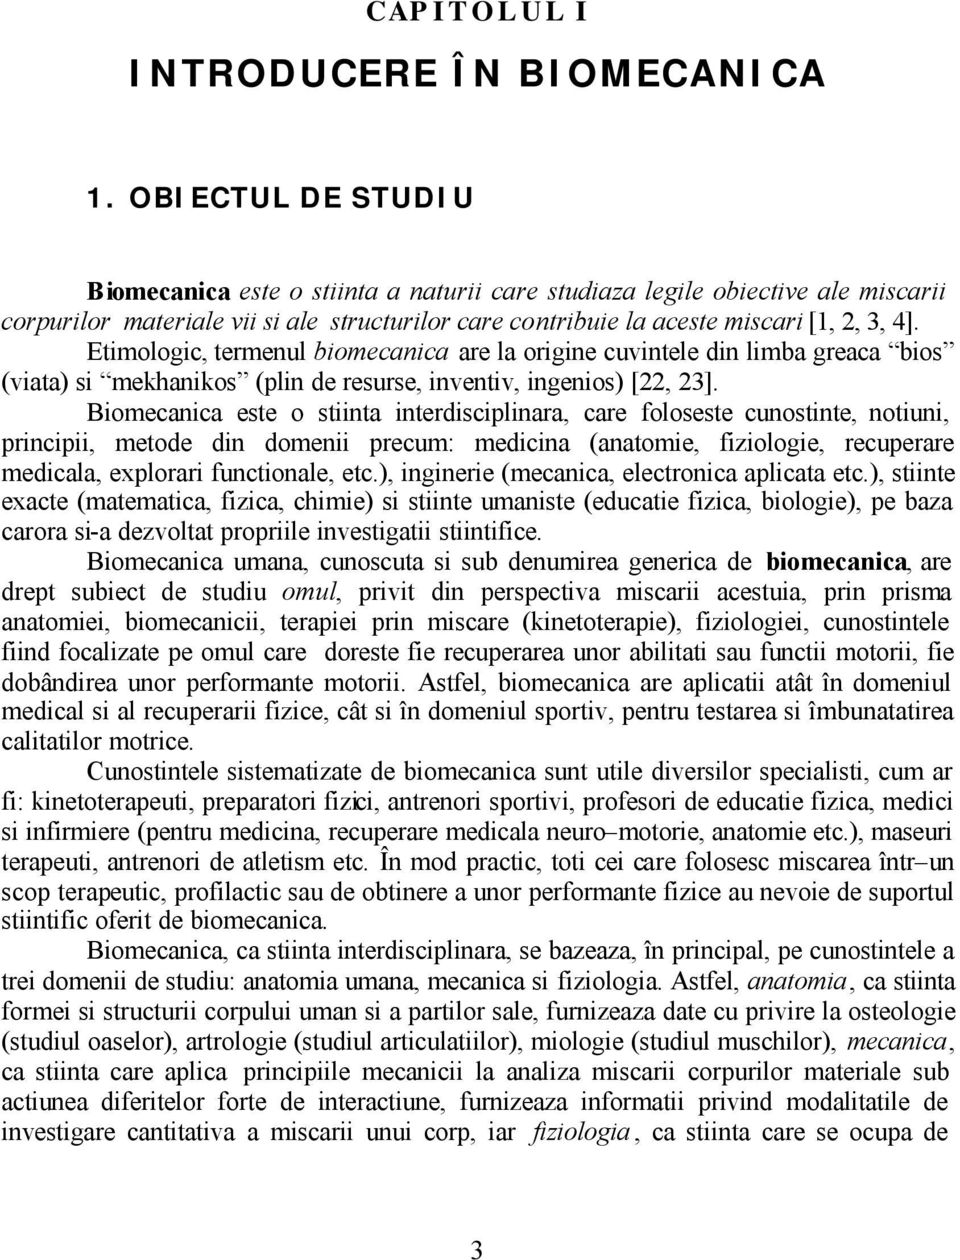 (PDF) Biomecanica articulara | Anuky- Nuky - addamsscrub.ro